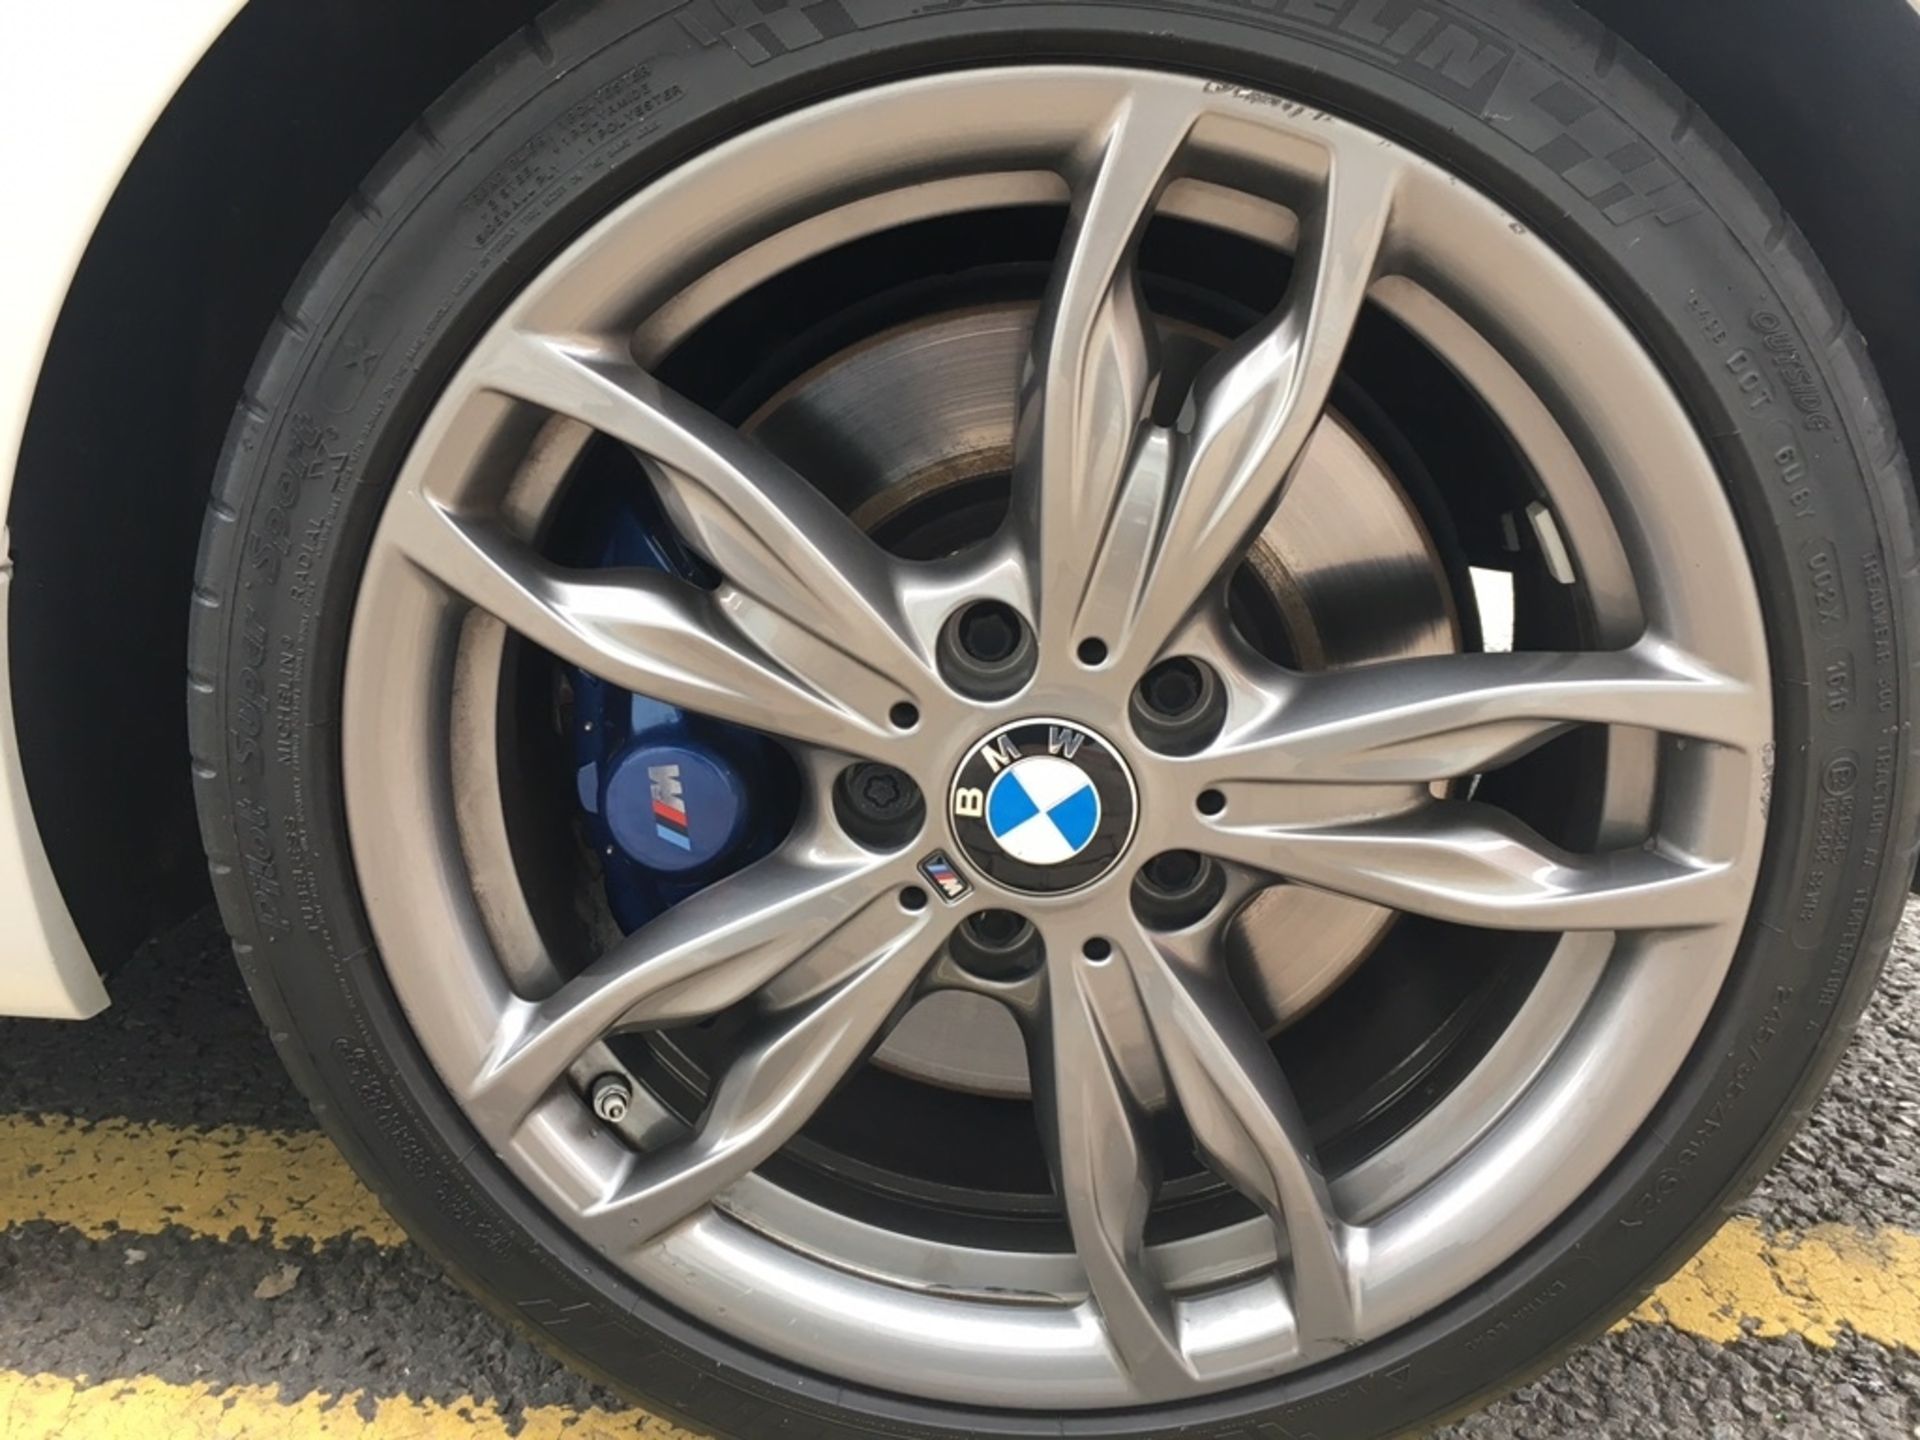 BMW 2 Series 3.0 M235i Sport Auto – 2 Dr- Petrol – 2016 – White Reg: BG66 UDU – 2016 Mileage: 32,000 - Image 6 of 6